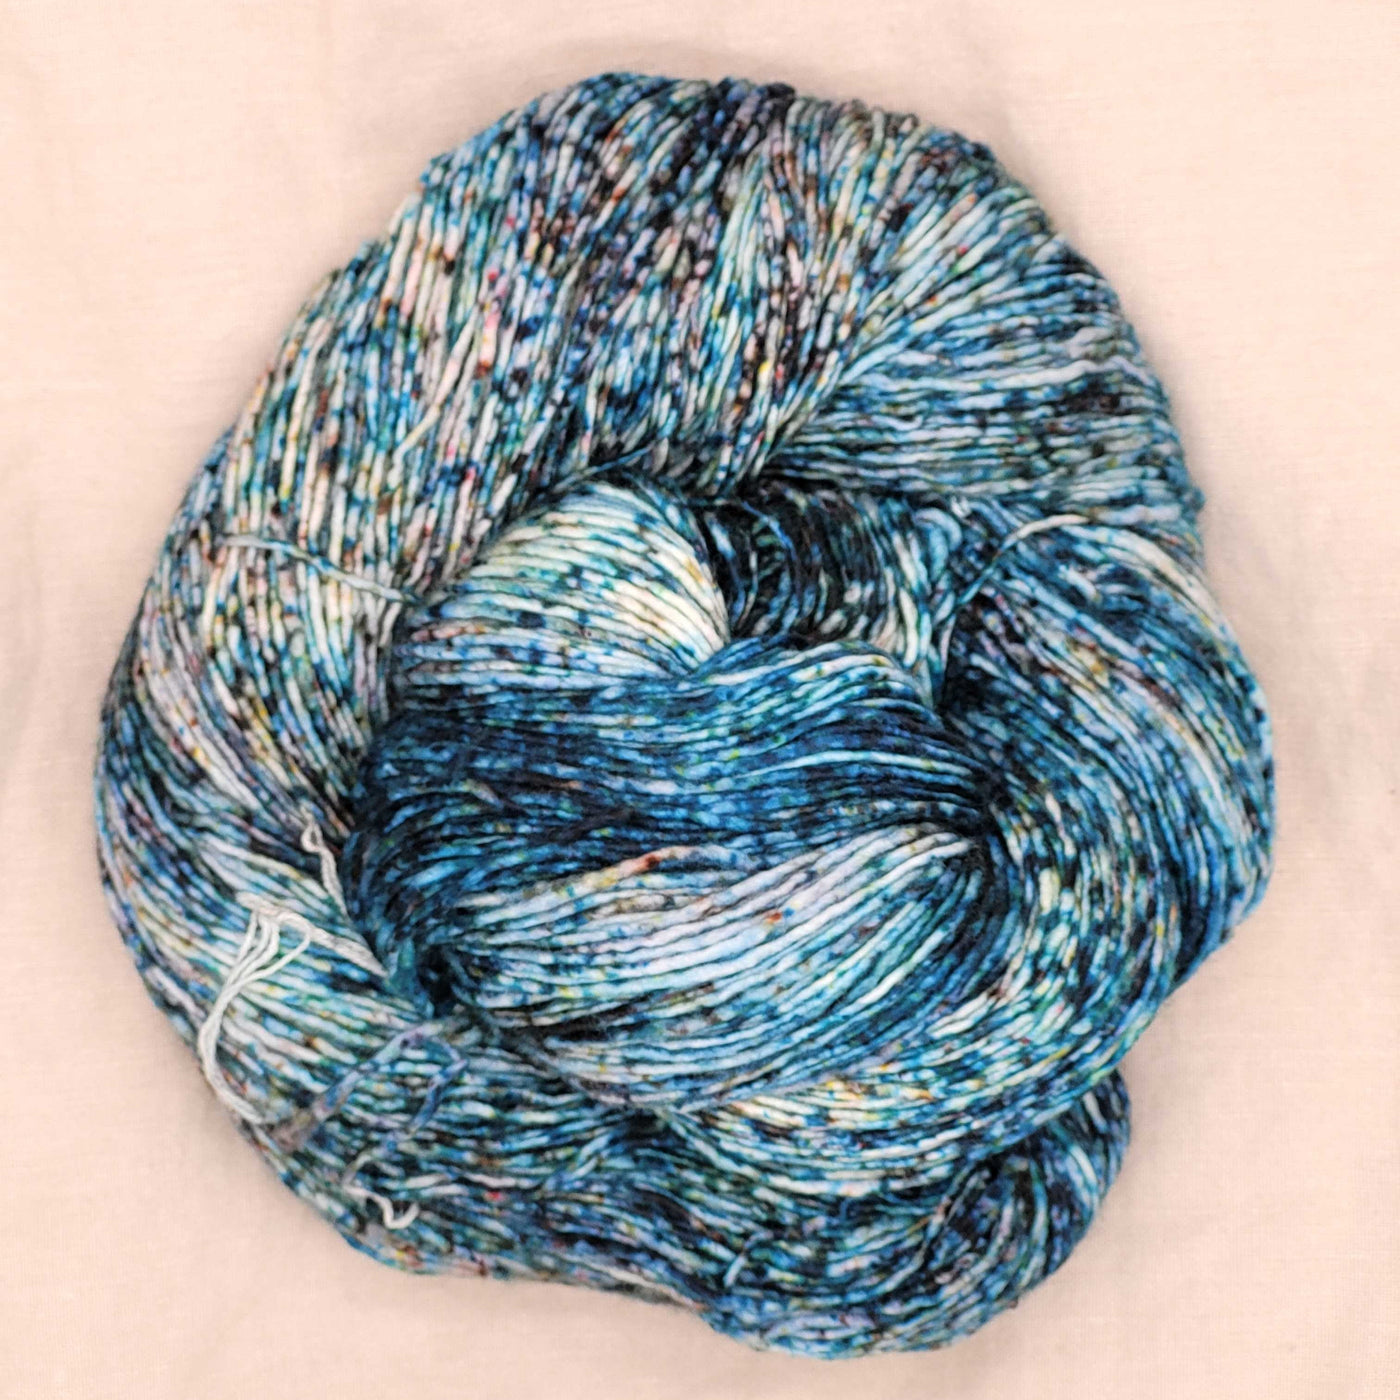 Malabrigo Mechita Merino Knitting Yarn